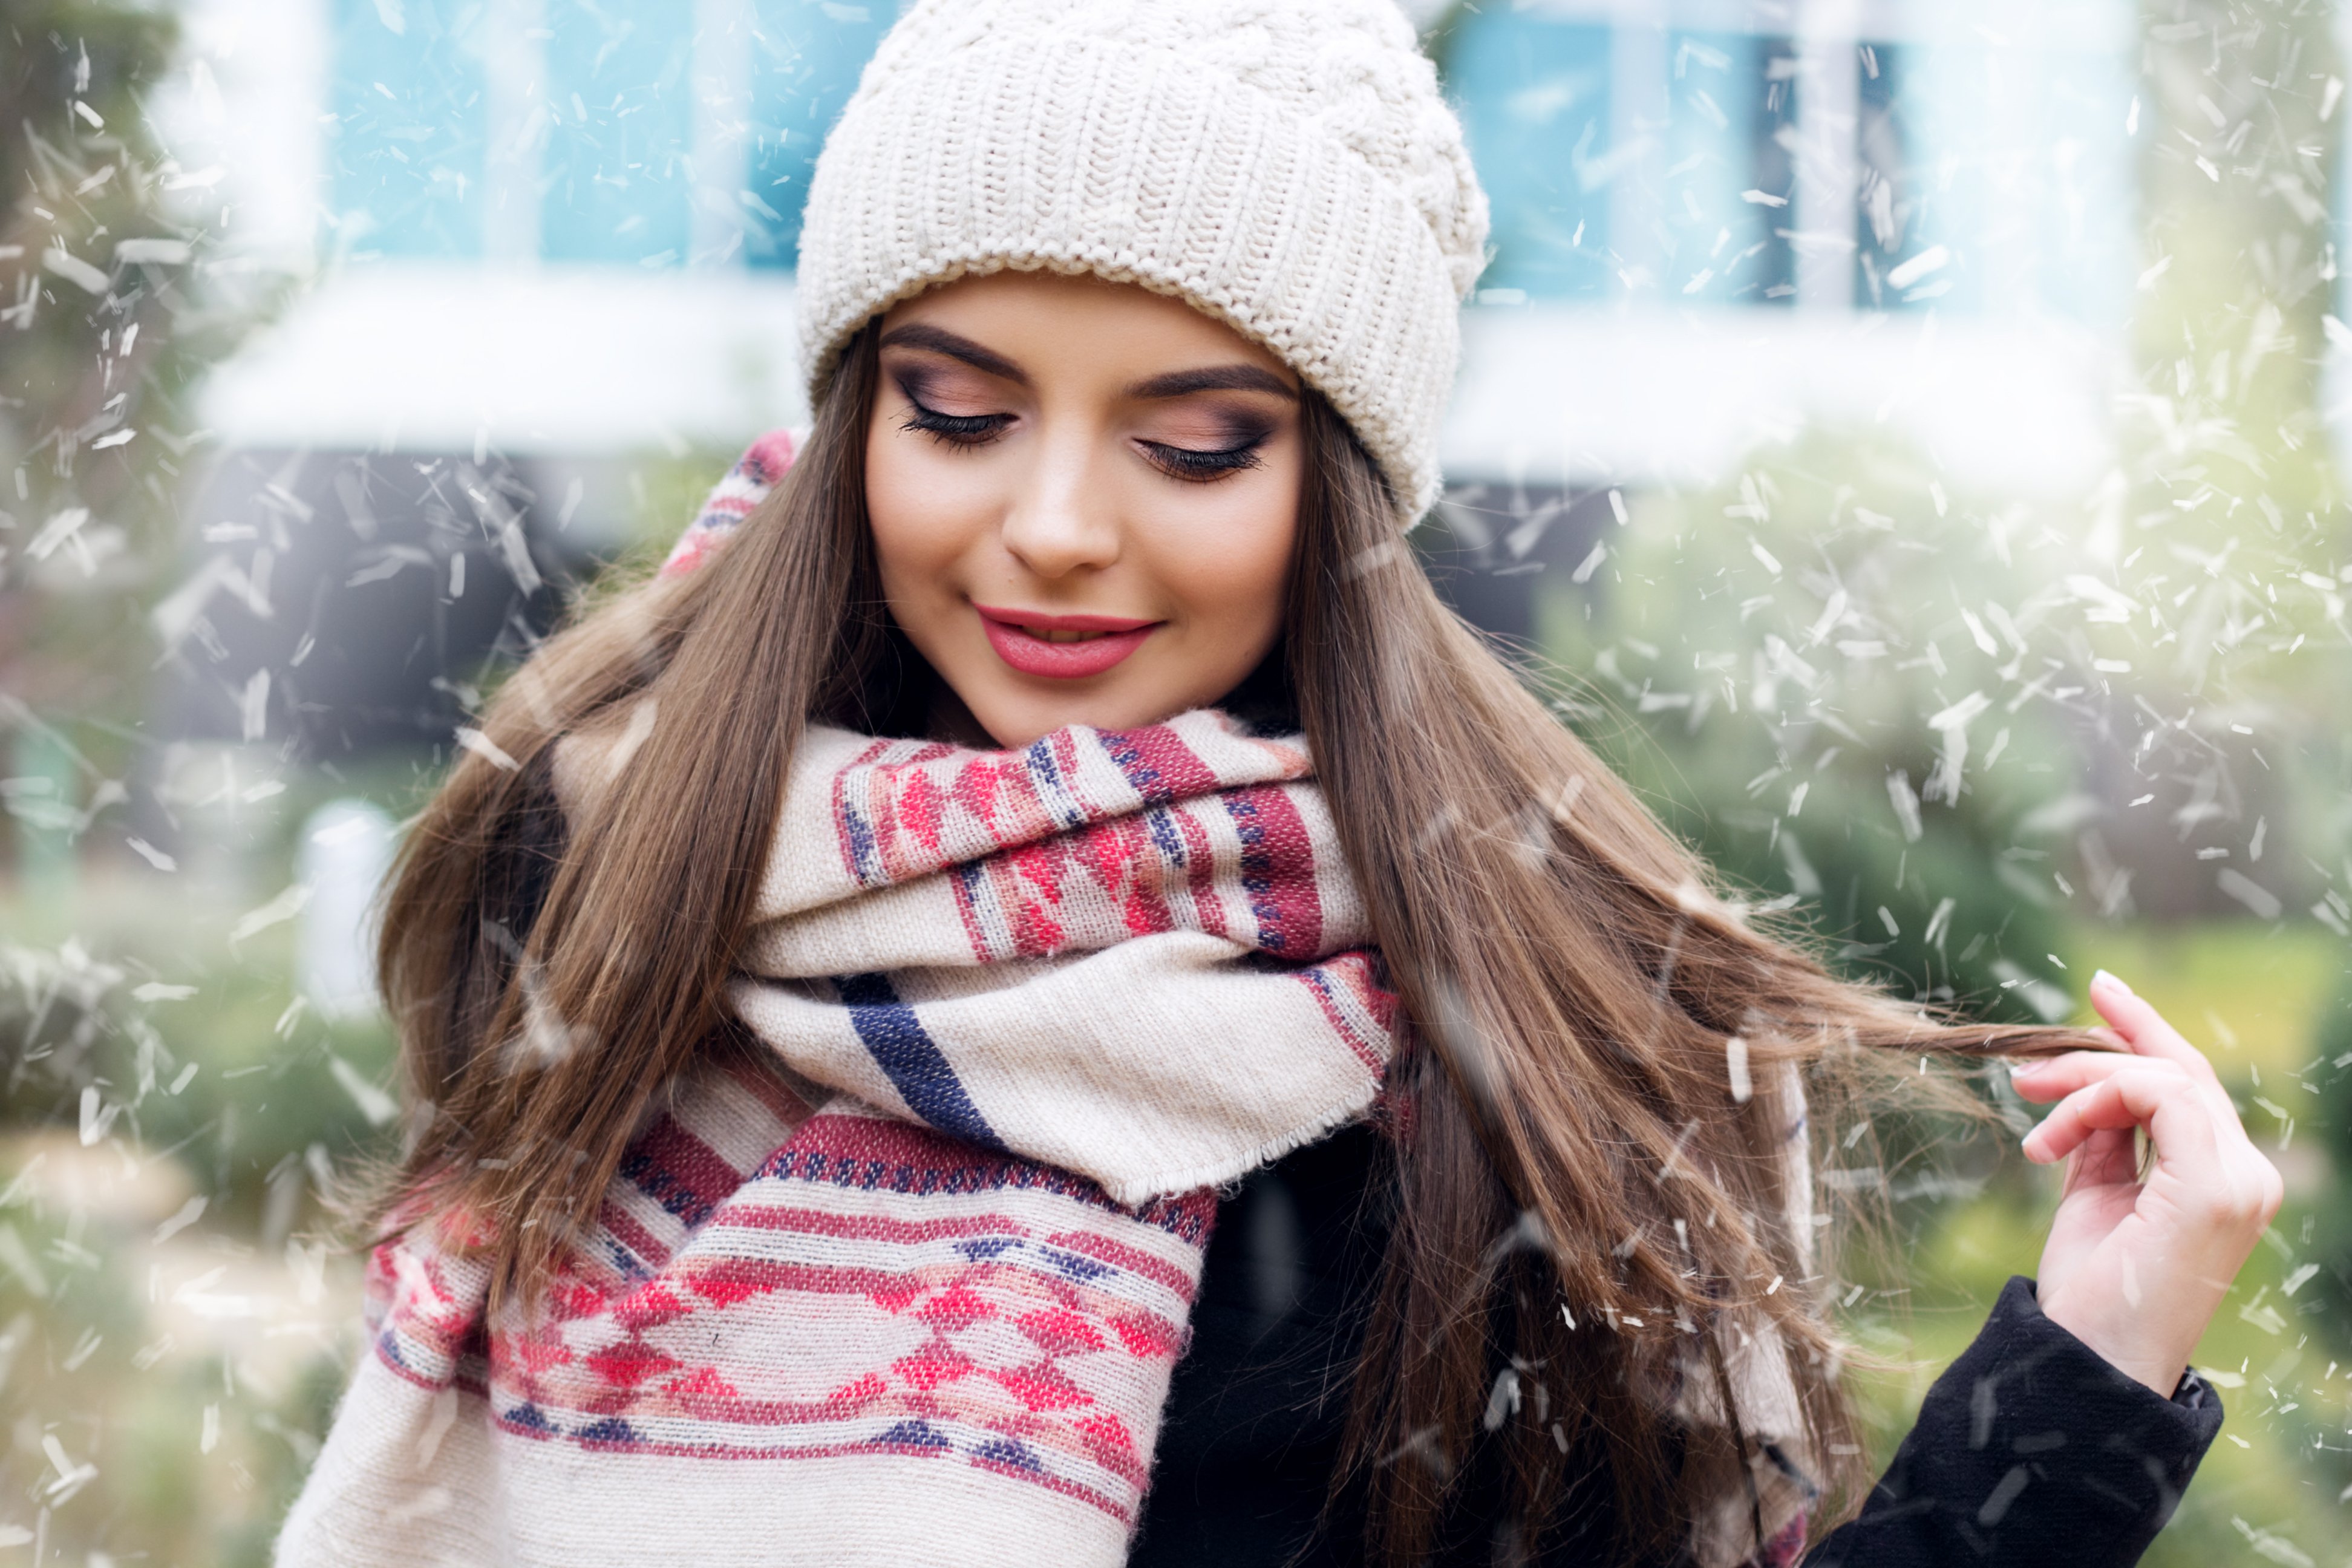 Modelo con ropa y maquillaje de invierno. | Foto: Shutterstock